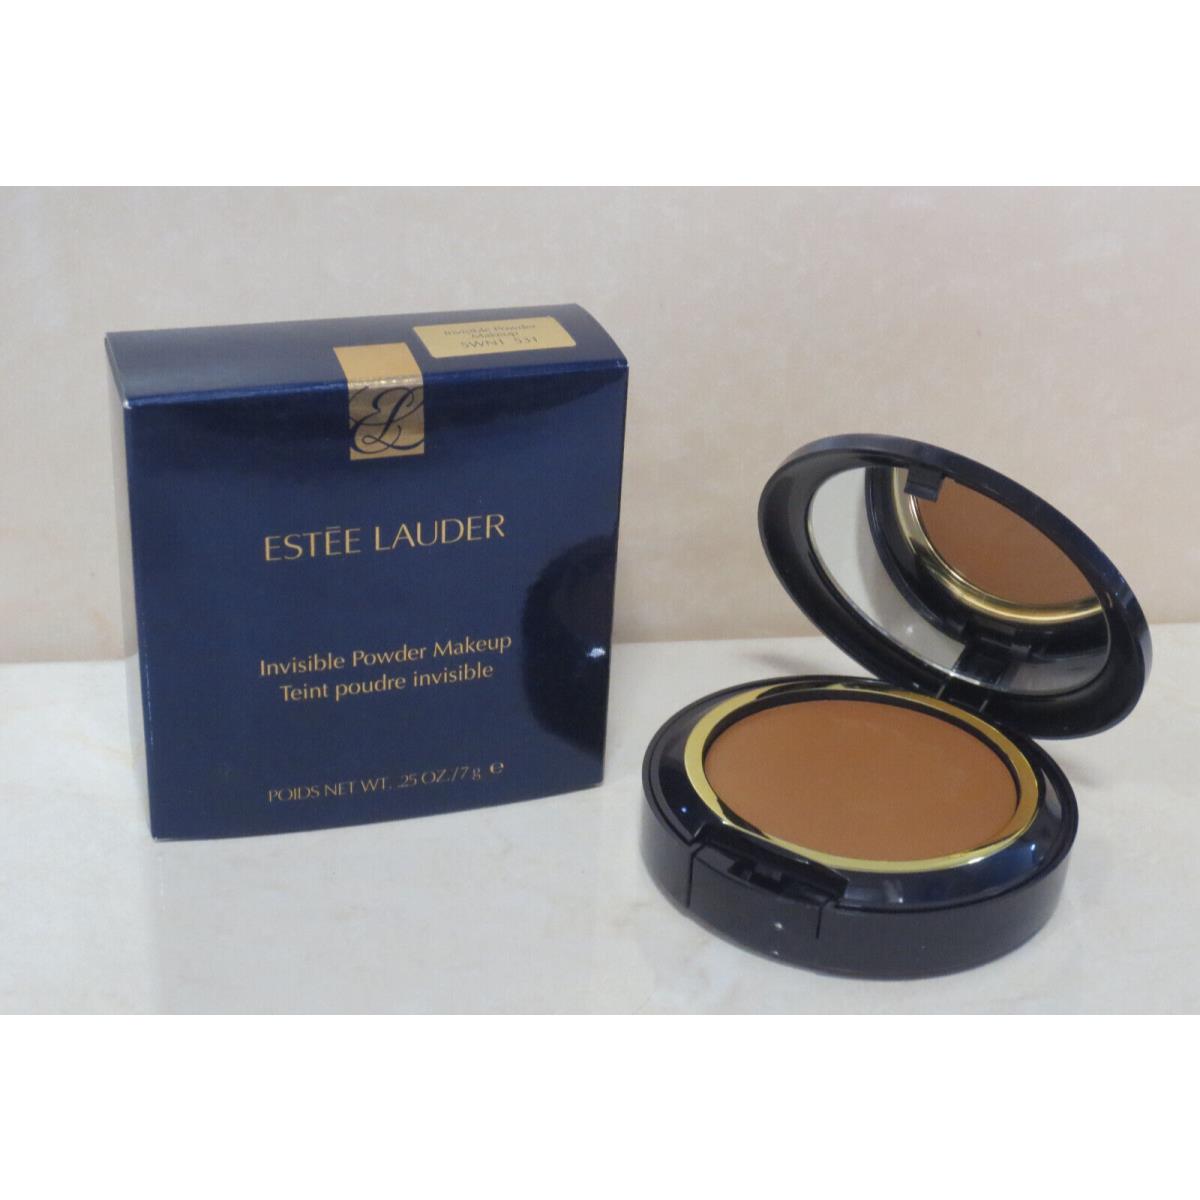 Estee Lauder Invisible Powder Makeup - 5WN1 531 - 0.25 OZ Read